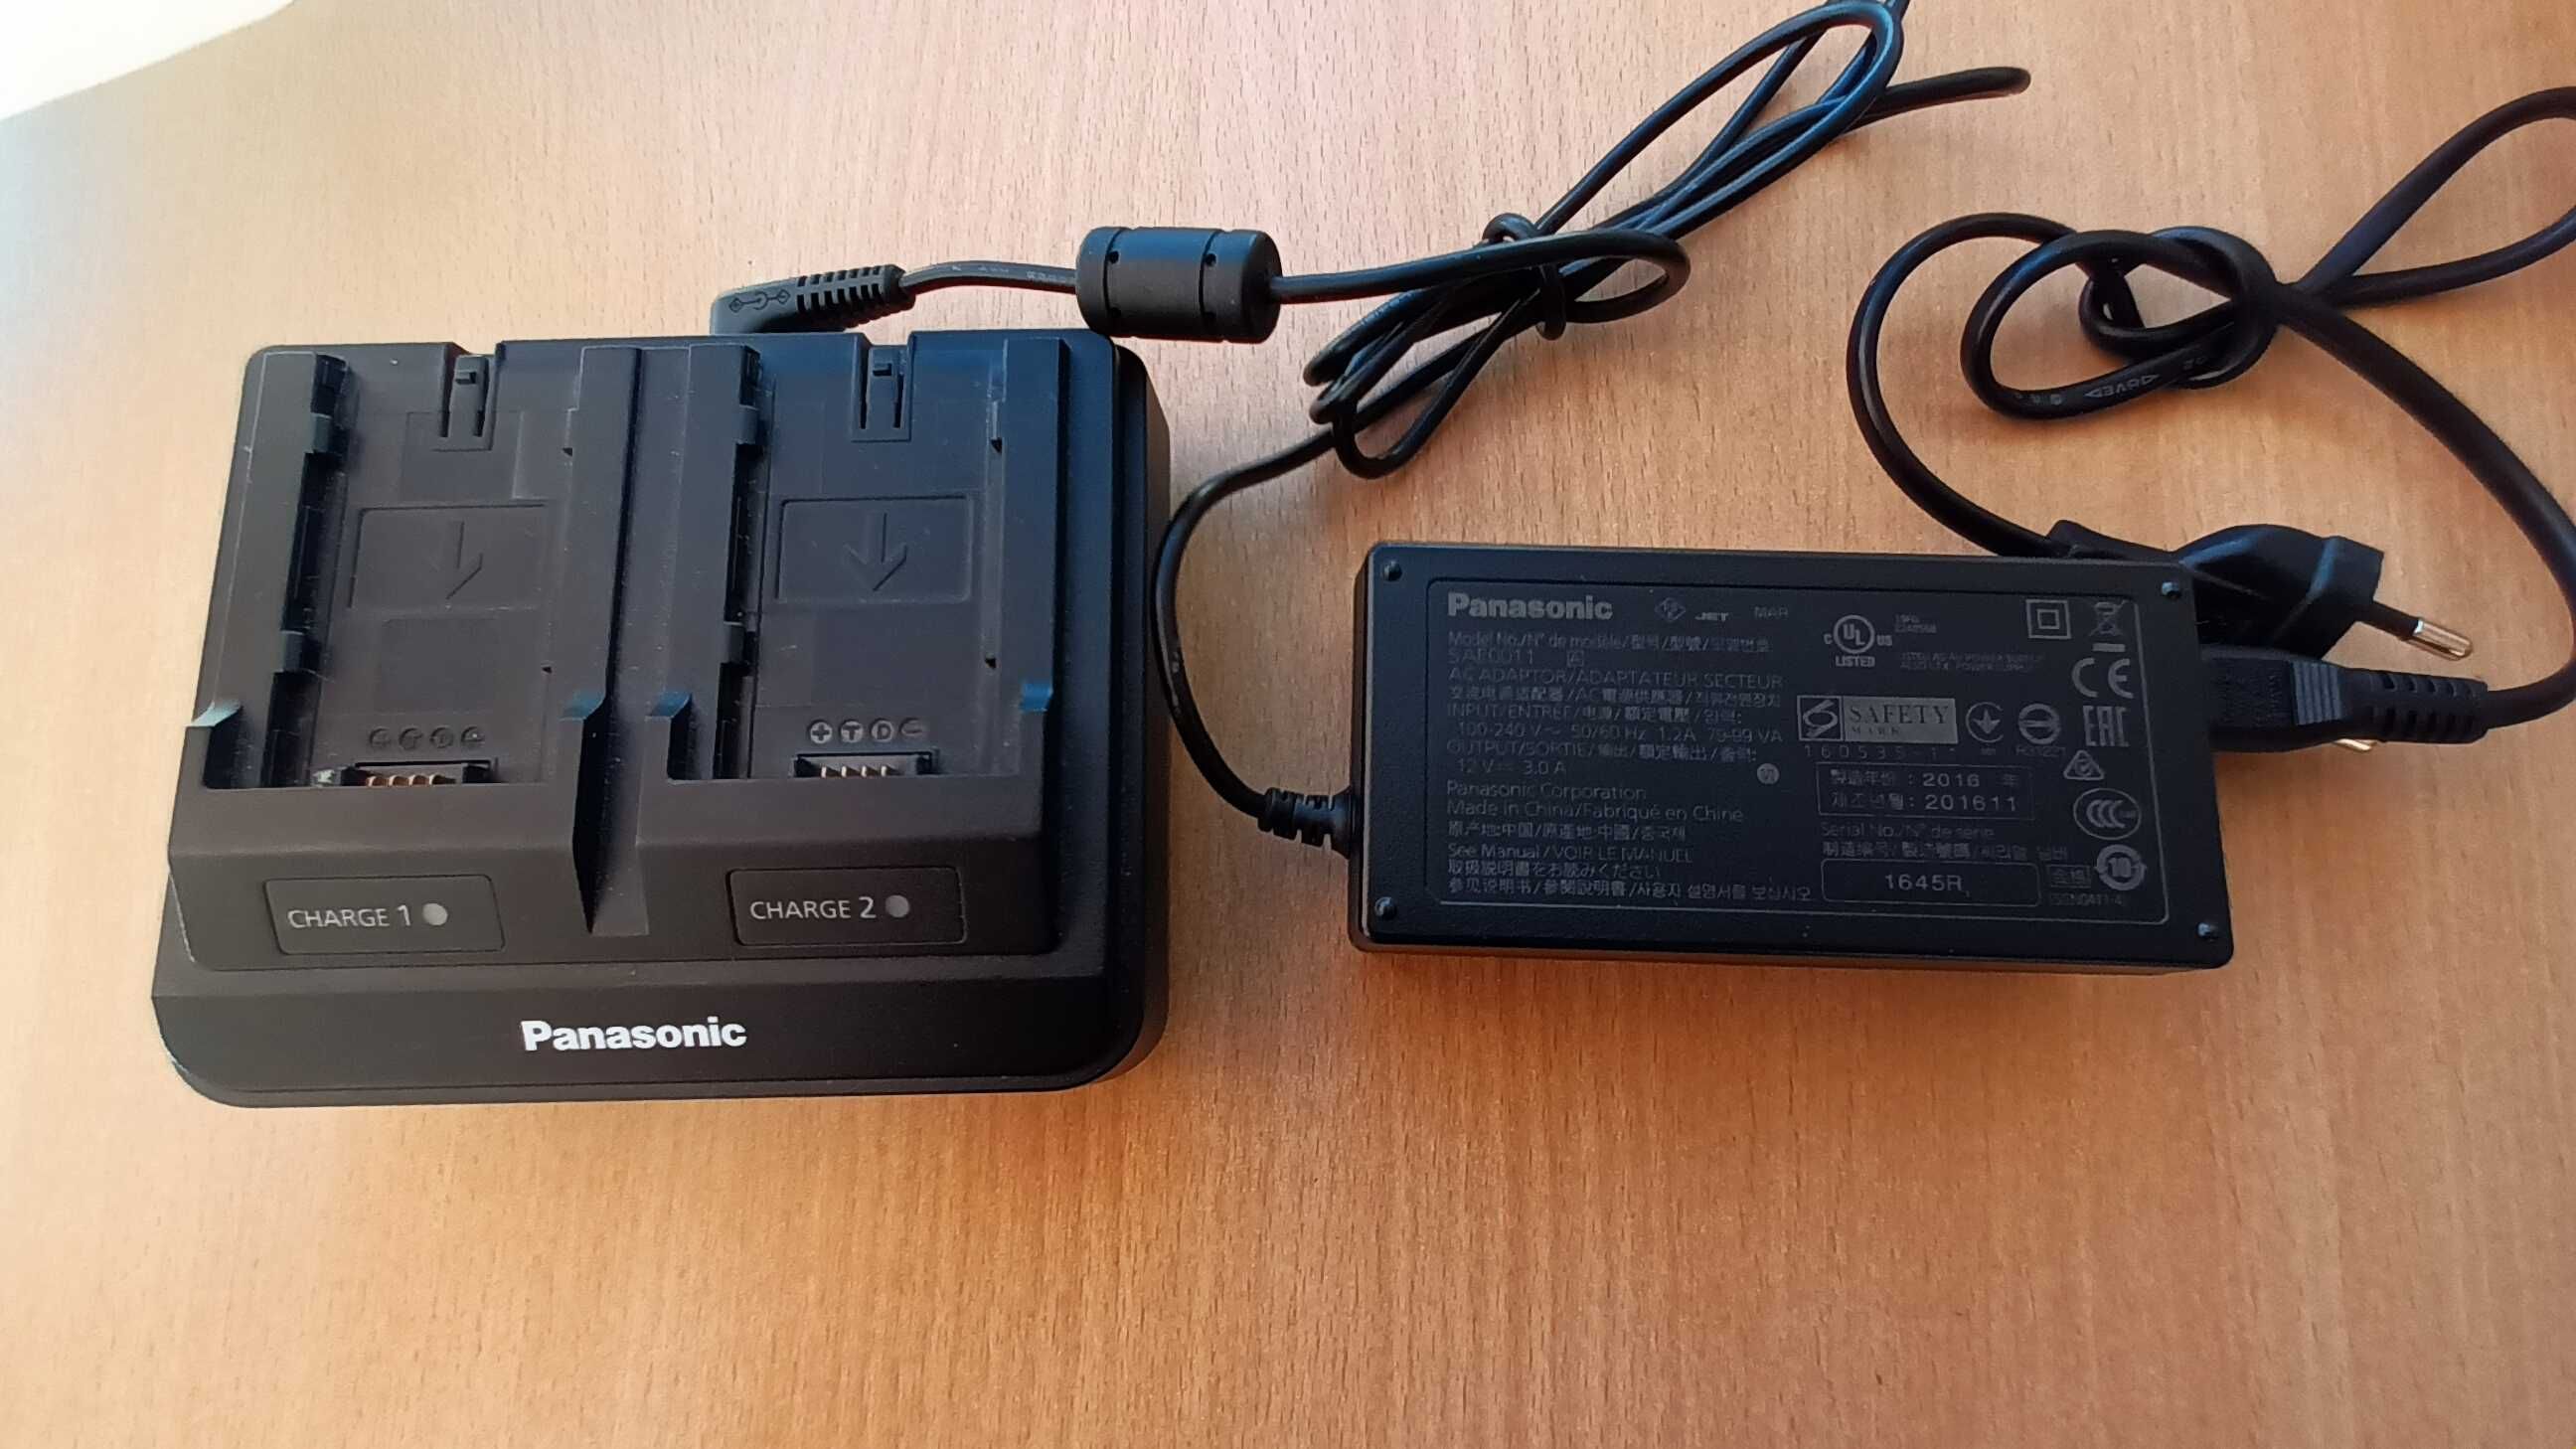 Camera Panasonic HC-X1 Pro 4K + incarcator + acumulatori